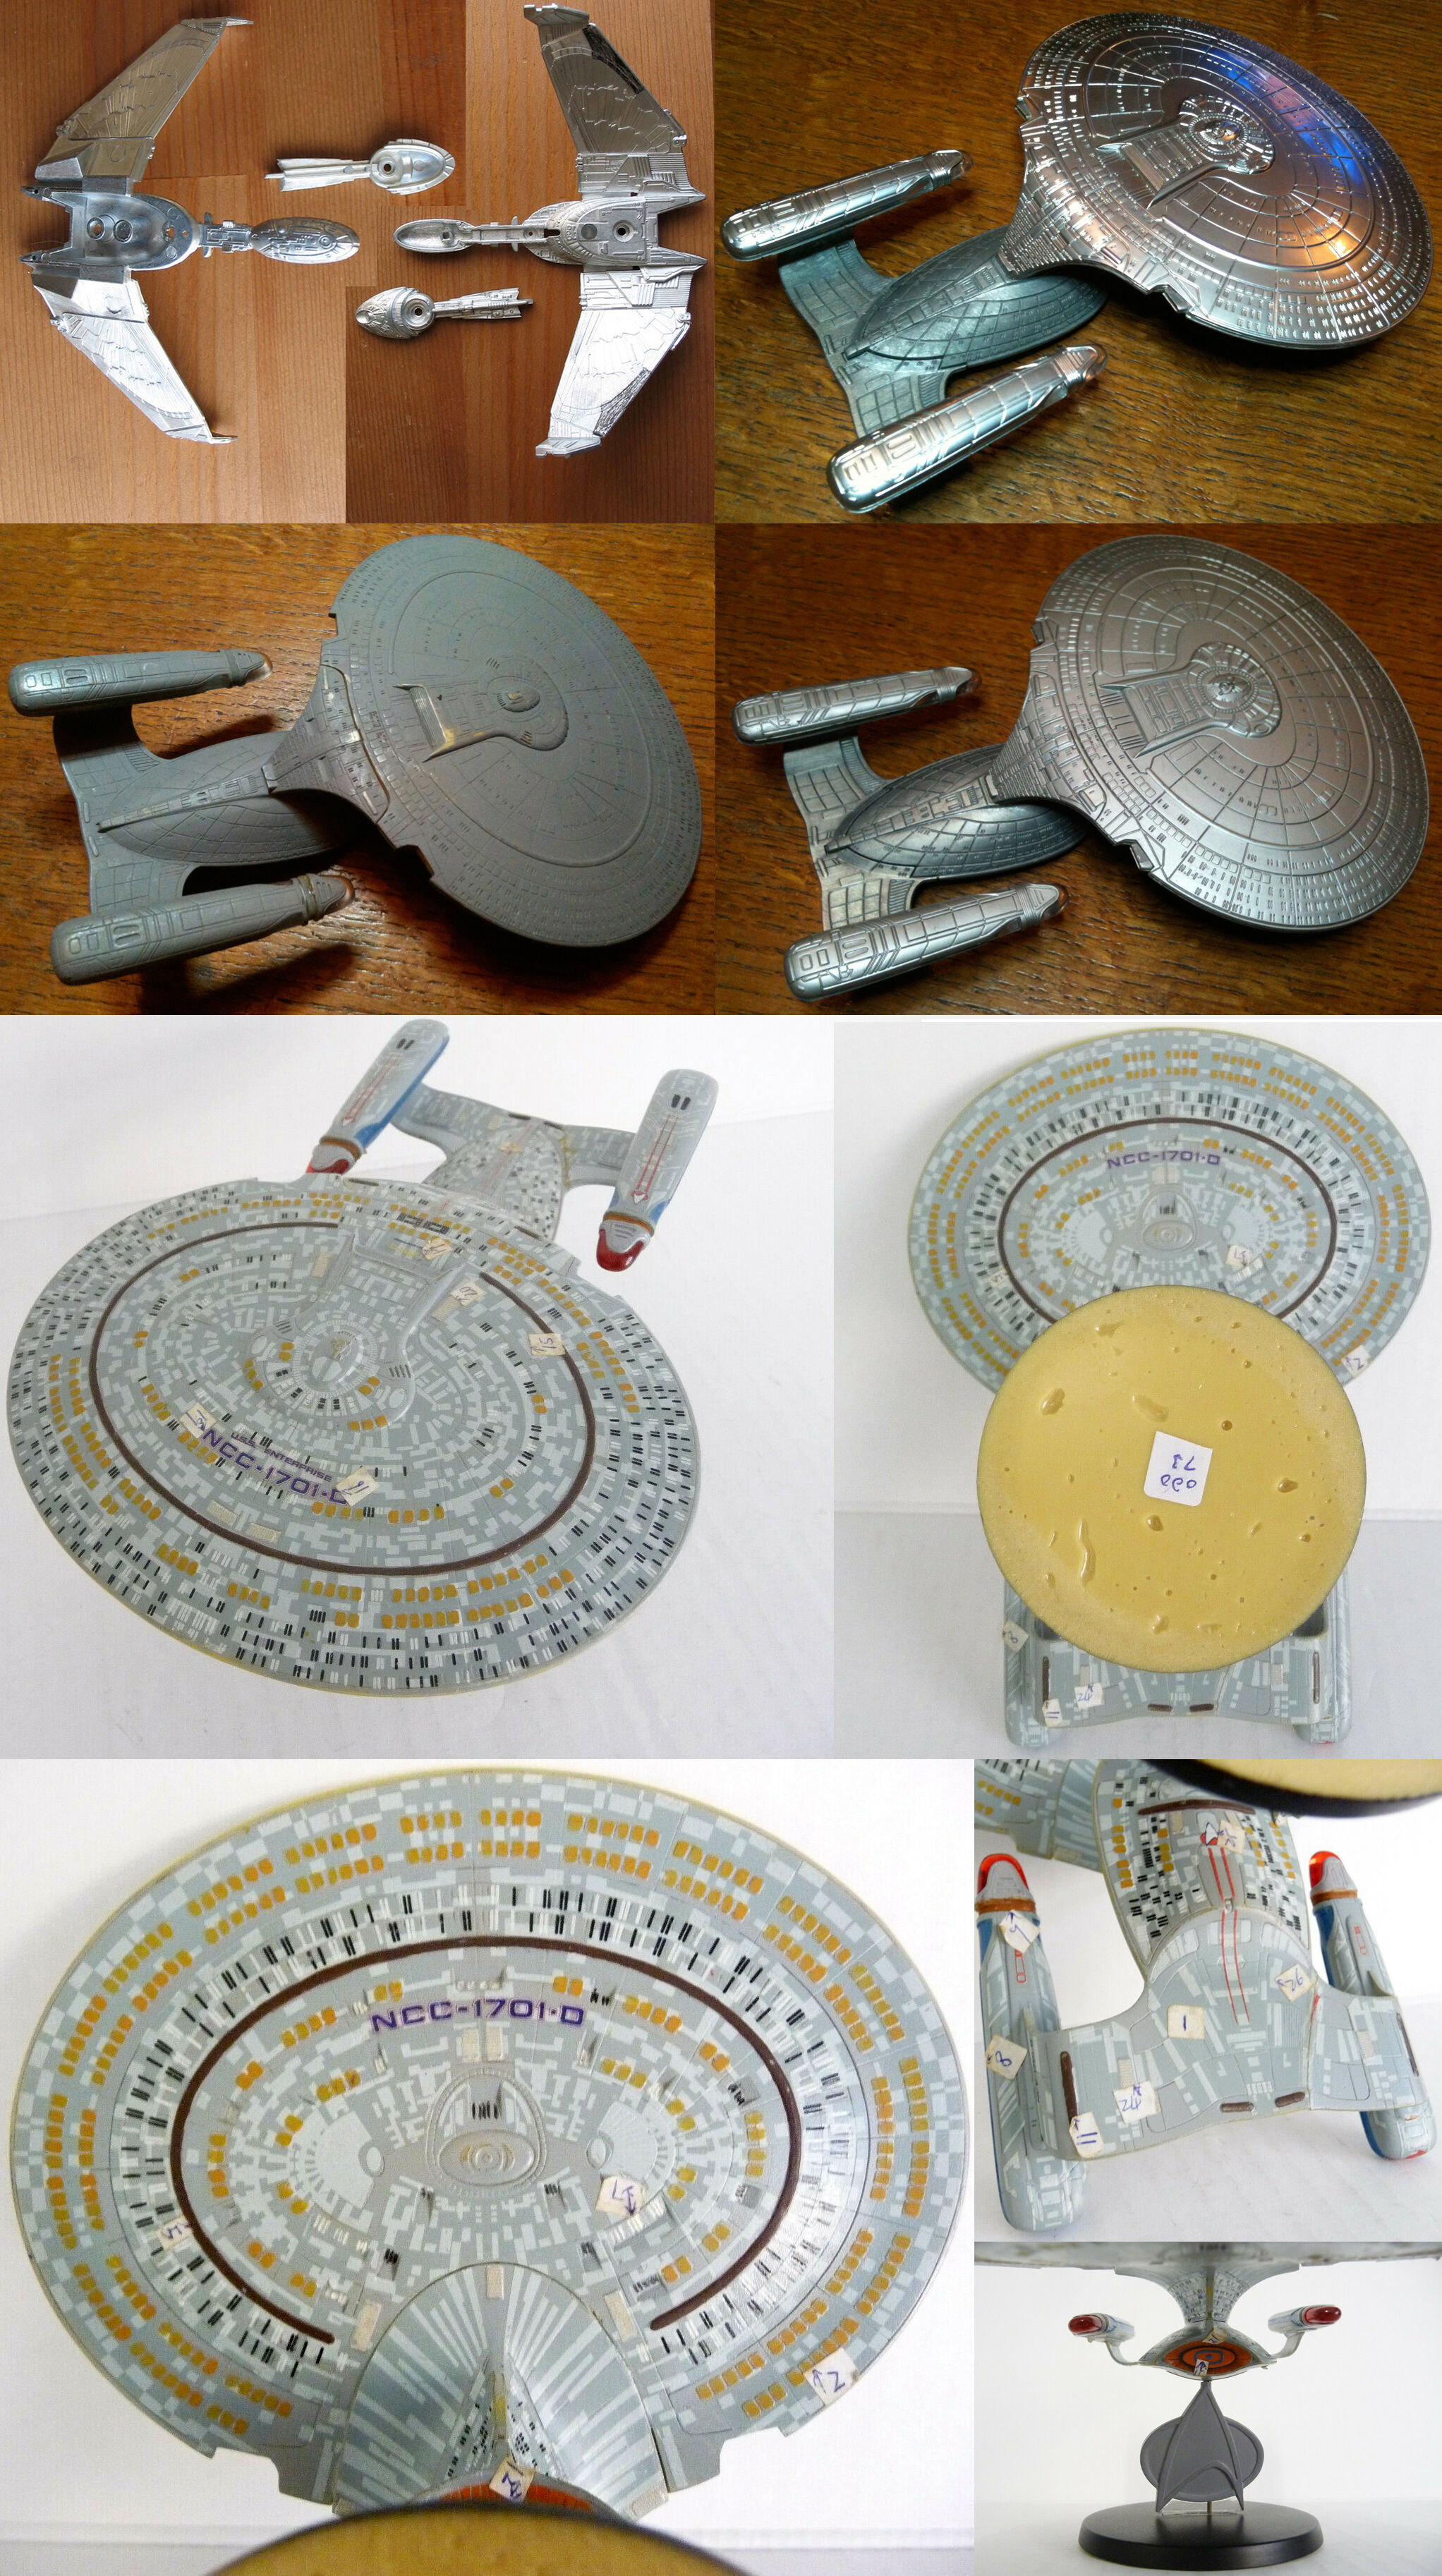 Star Trek - USS Enterprise NCC-1701 (The Original Series) By Corgi (CC96610)